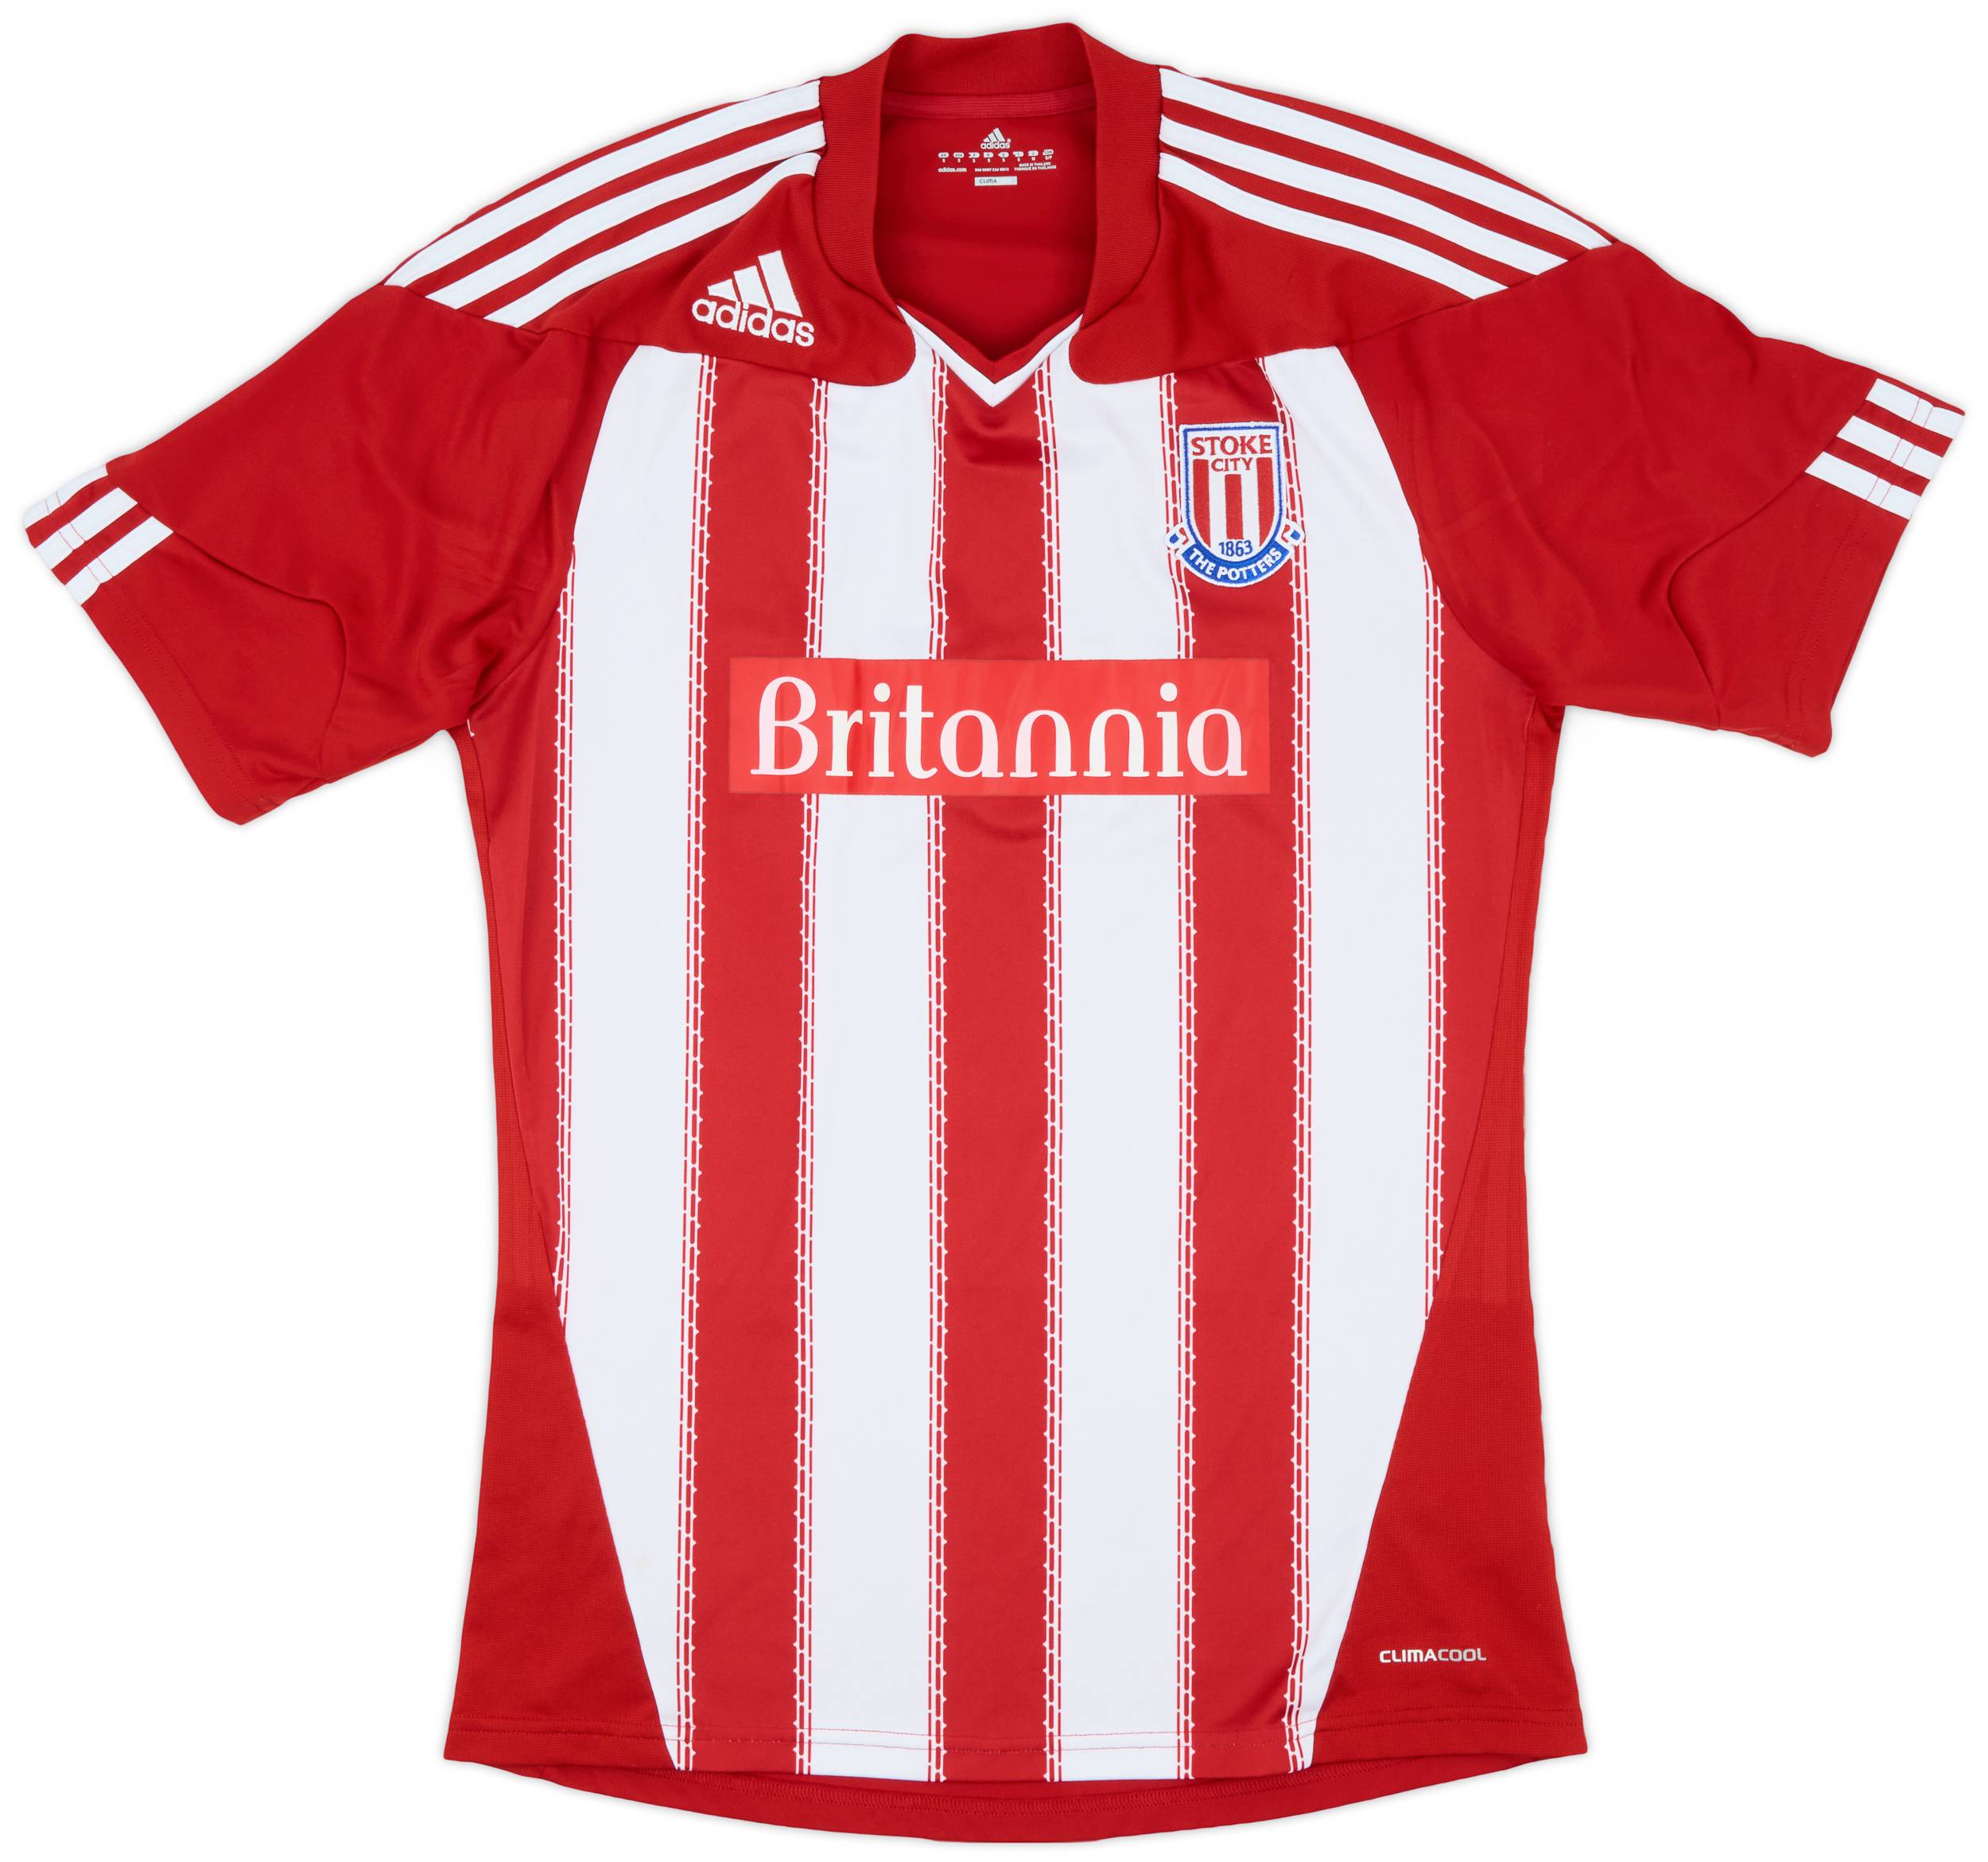 2010-11 Stoke City Home Shirt - 6/10 - (S)